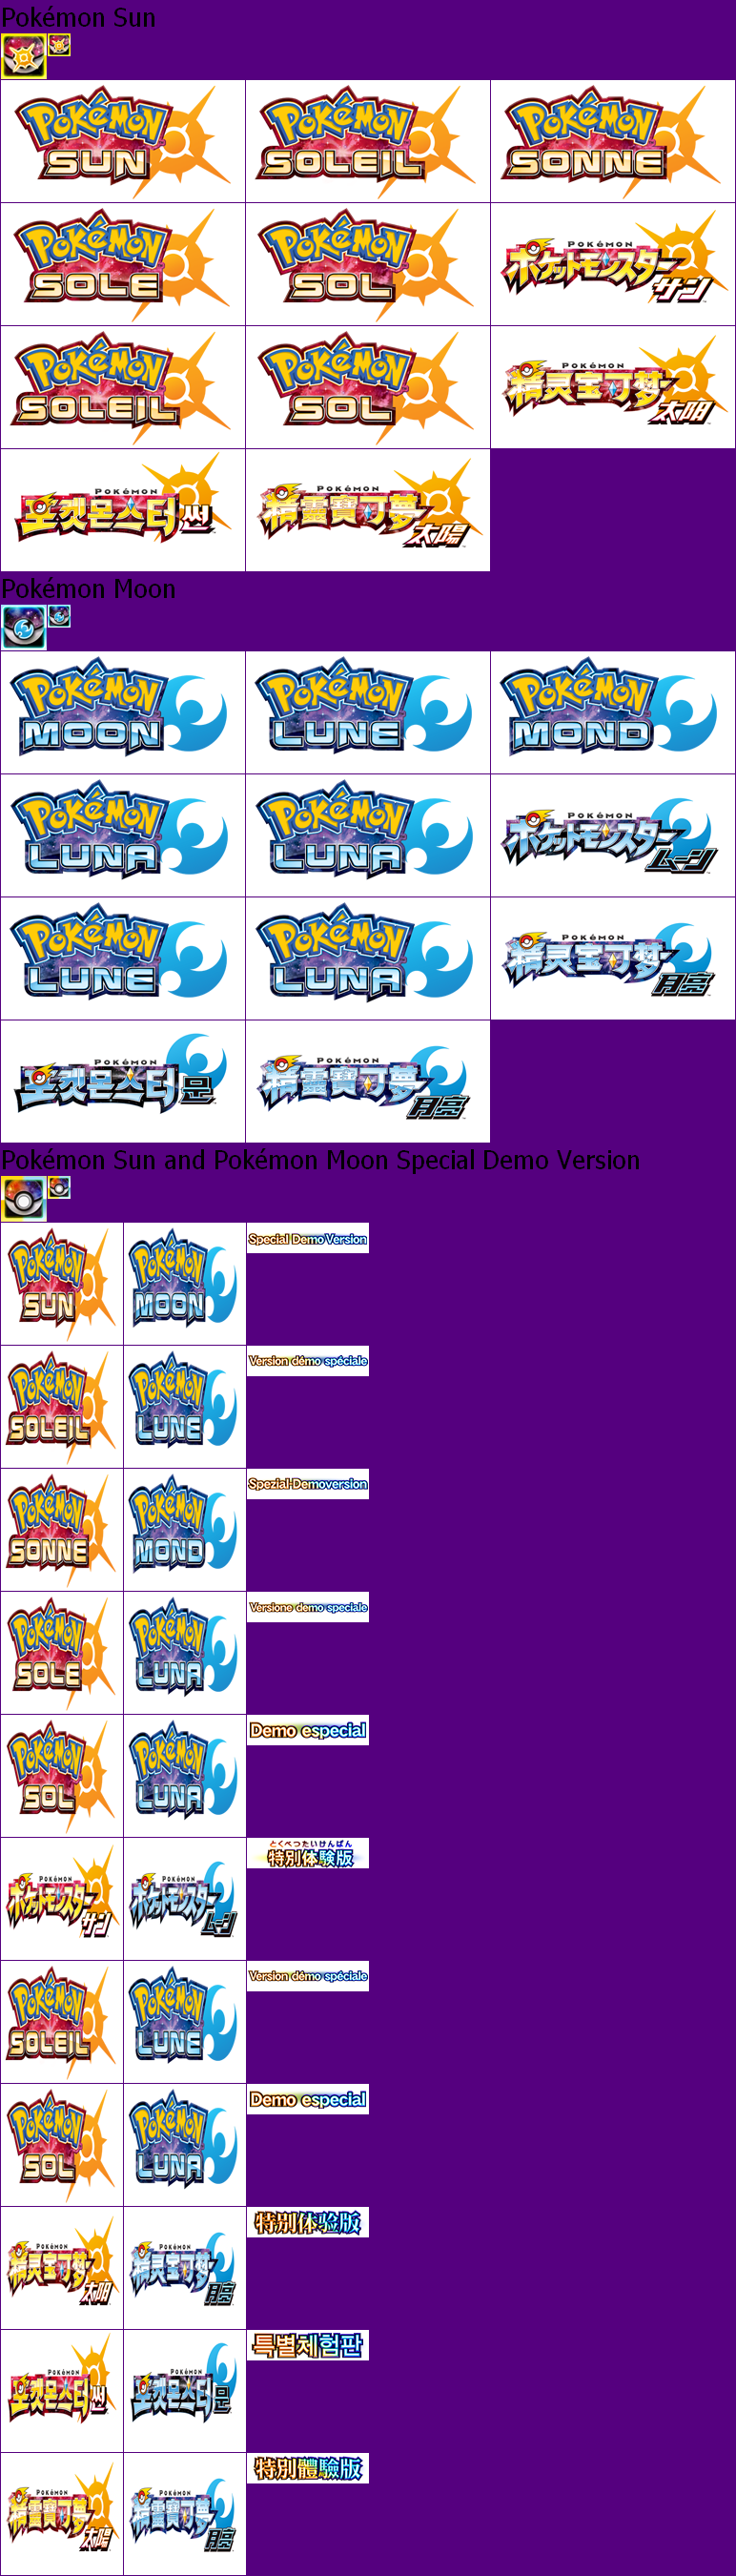 Pokémon Sun / Moon - HOME Menu Icons and Banners